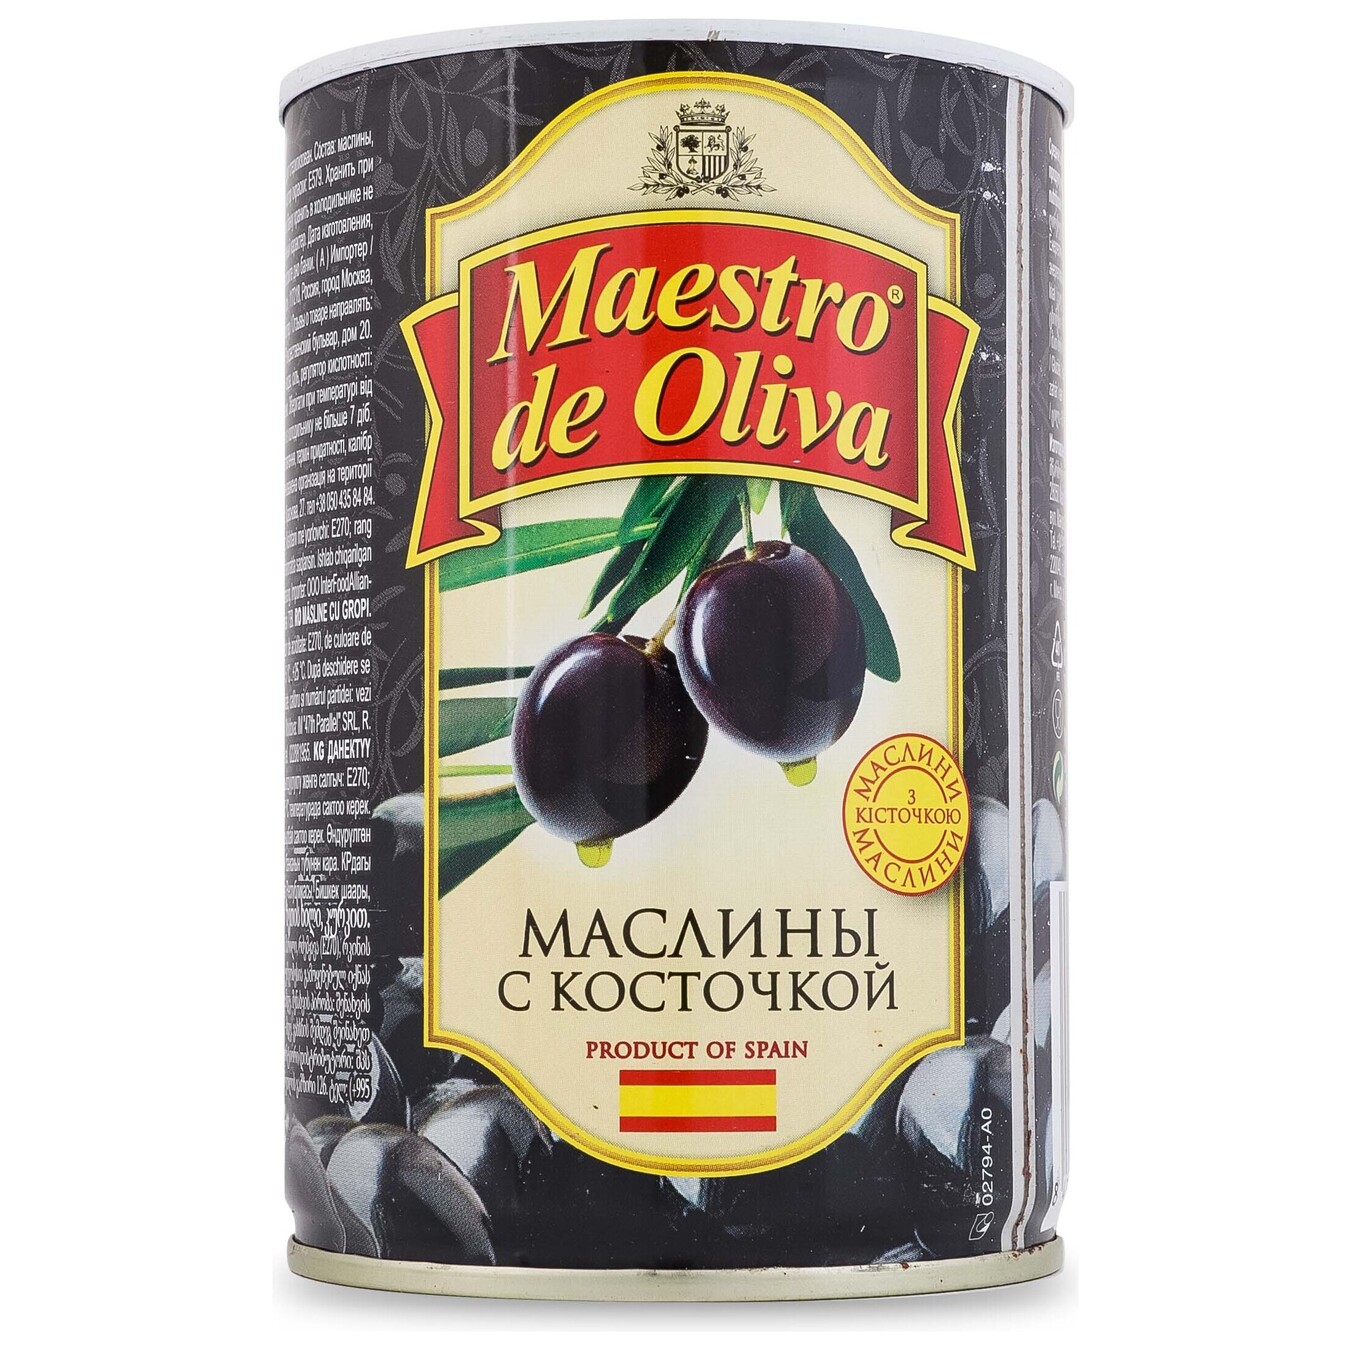 Maestro de Oliva black pitted olives 420g